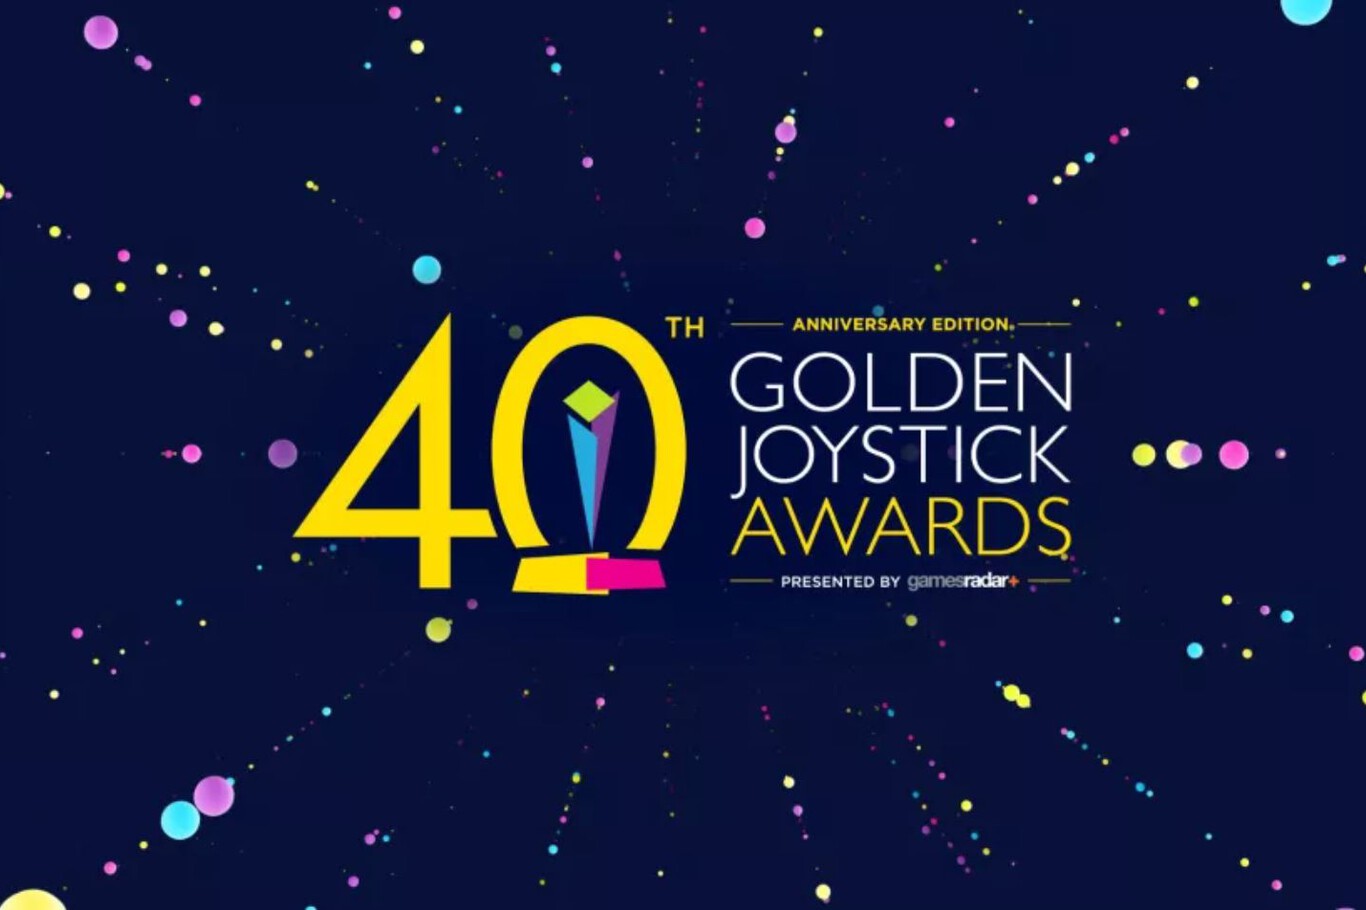 Nominados a los Golden Joystick Awards 2022 ¡Elden Ring lidera la lista!